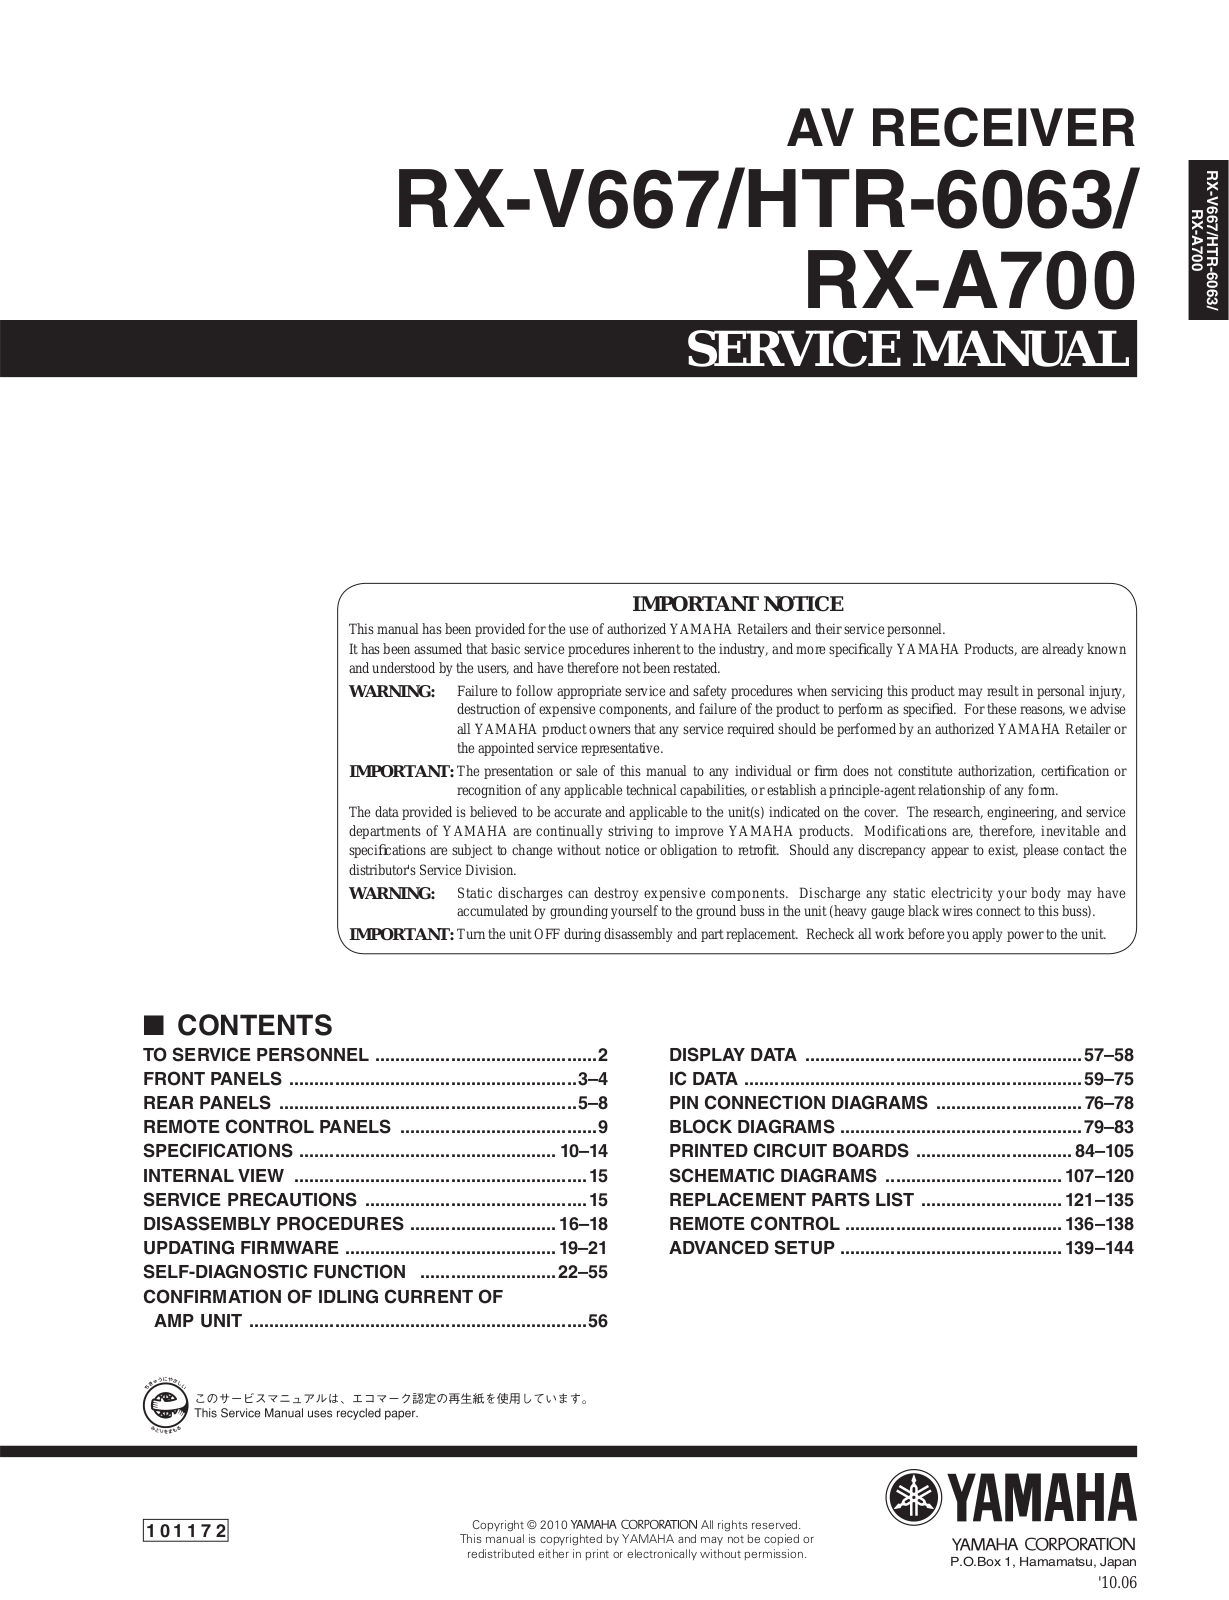 Yamaha RX-V667, RX-A700, HTR-6063 Service manual